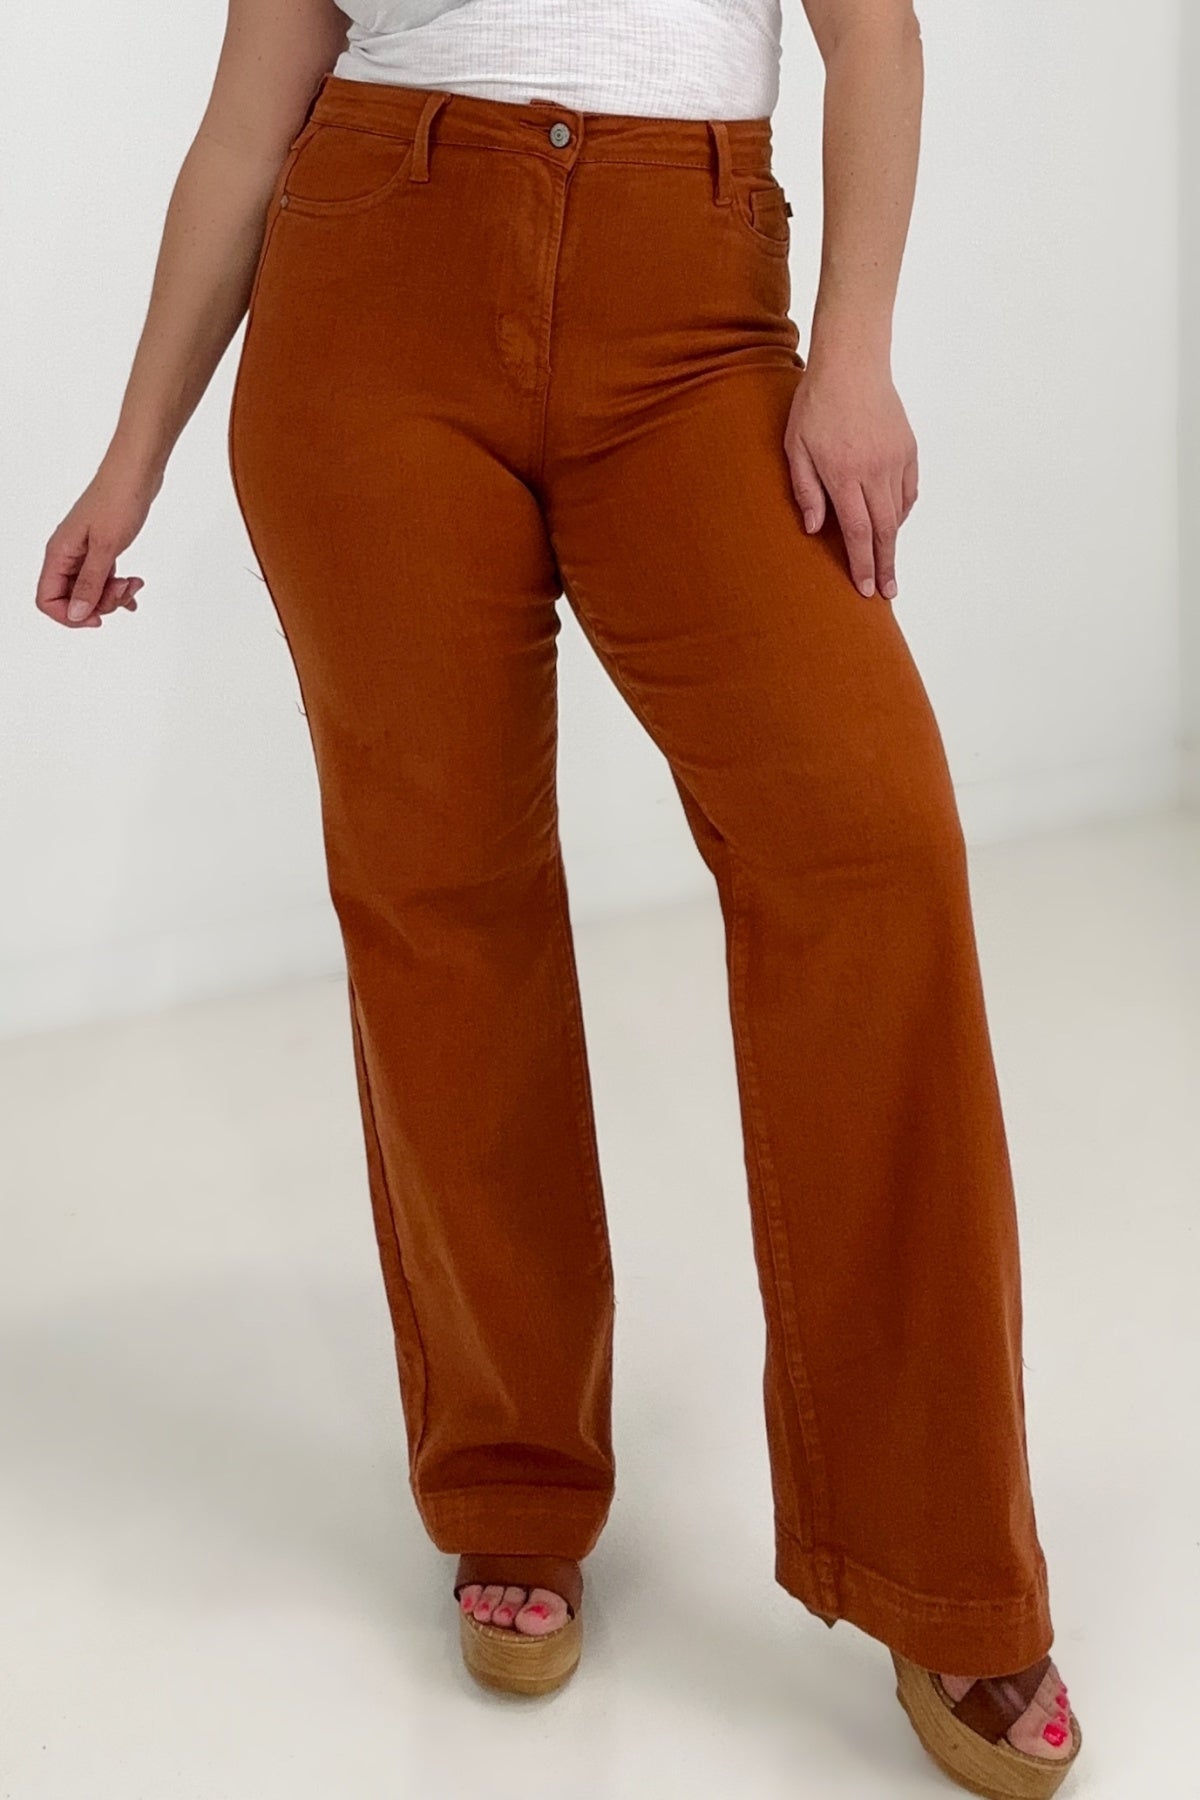 Tall Women's Orange Wide Leg Pants |Tall Clothing | Prissy Duck